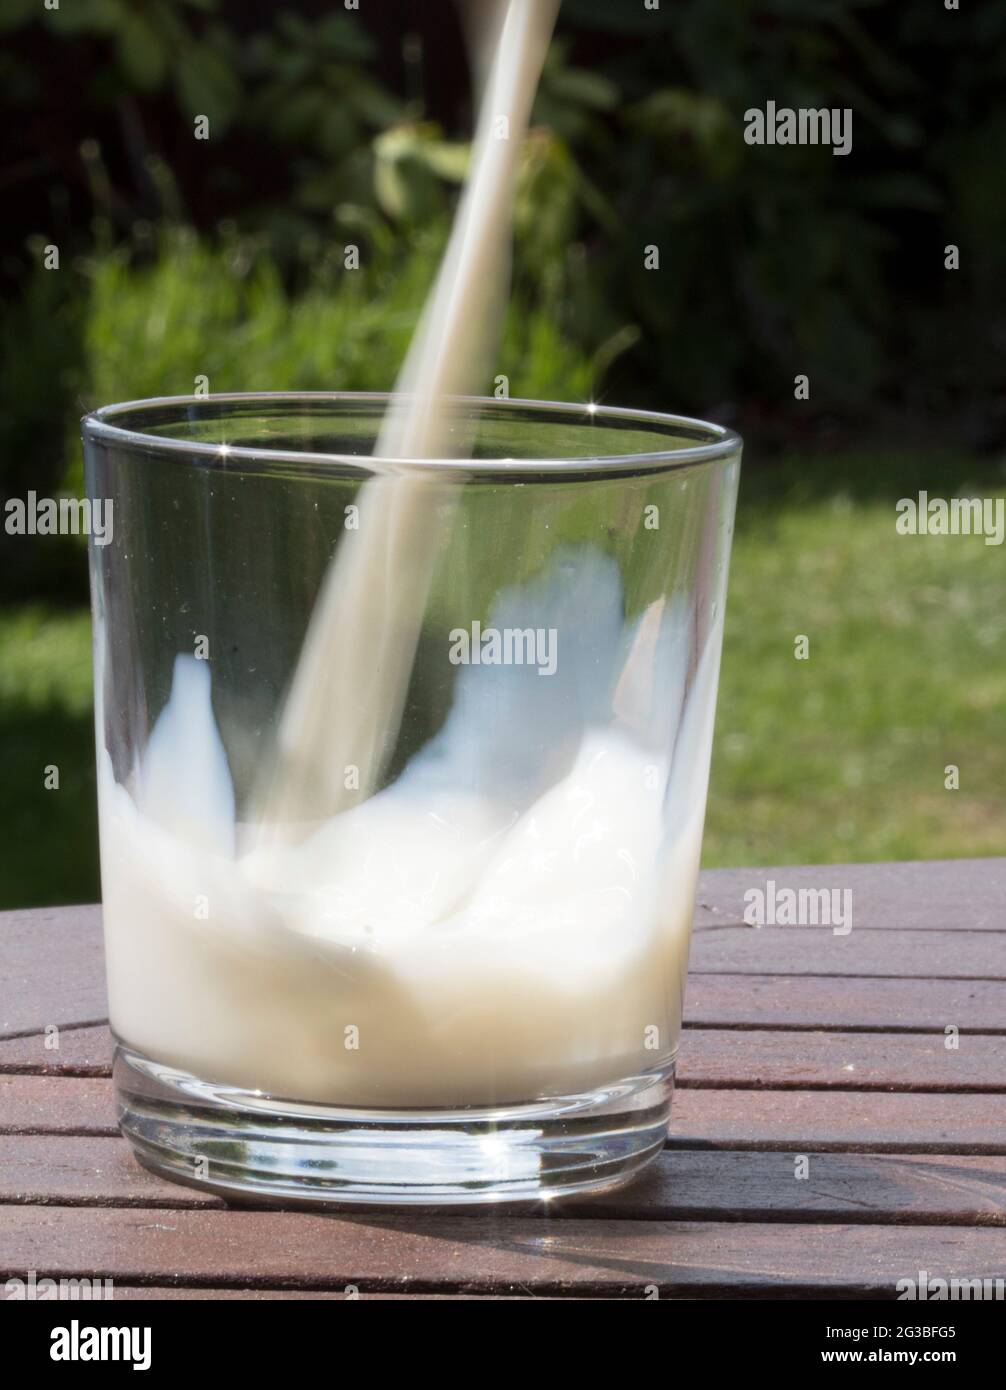 Verter en el vaso de leche Foto de stock